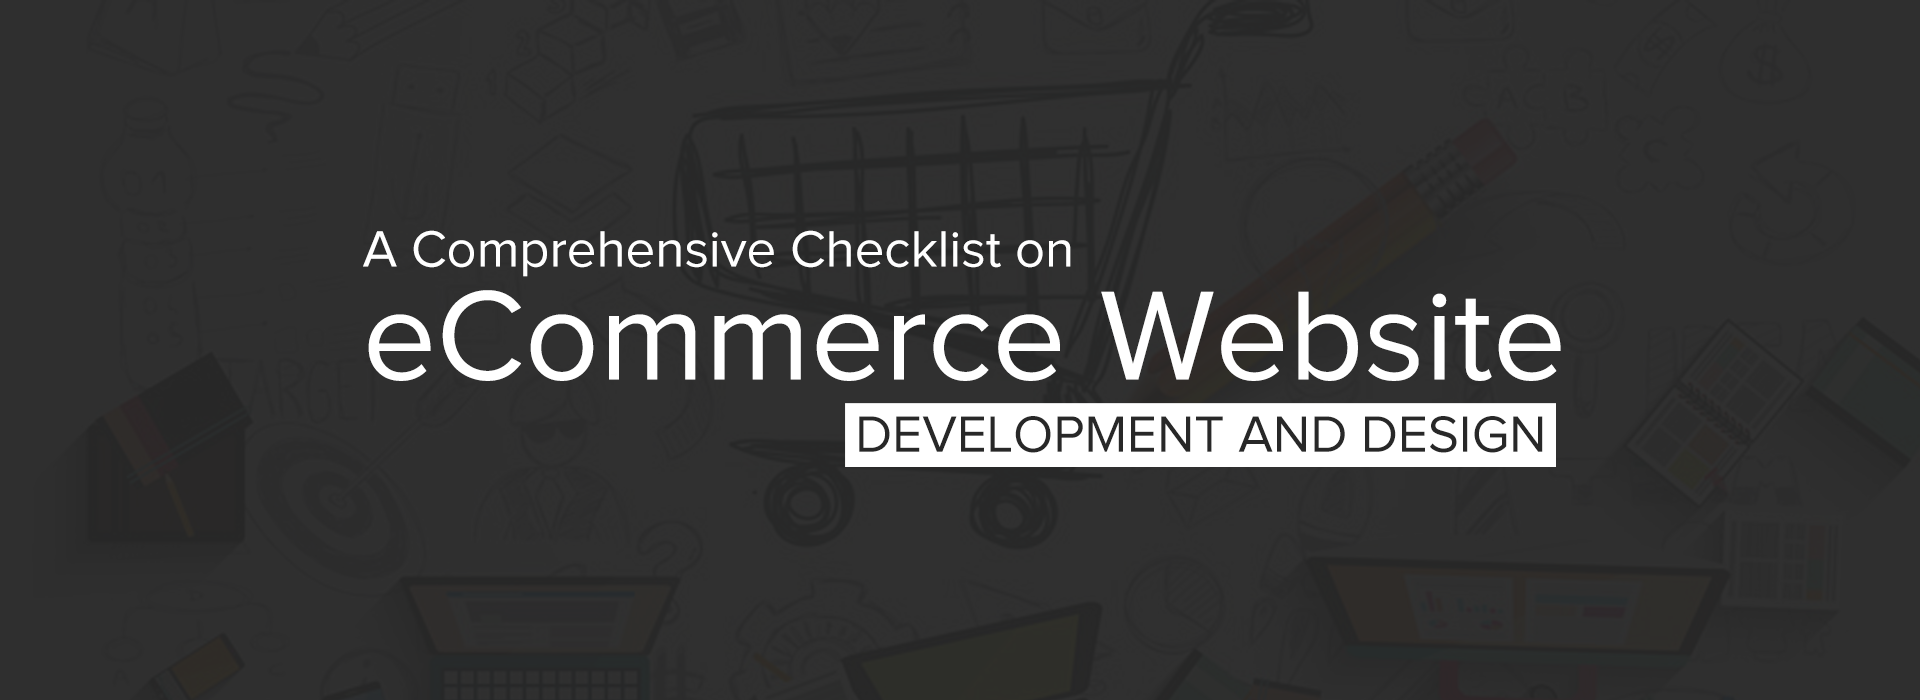 A-Comprehensive-Checklist-on-eCommerce-Website-Development-and-Design